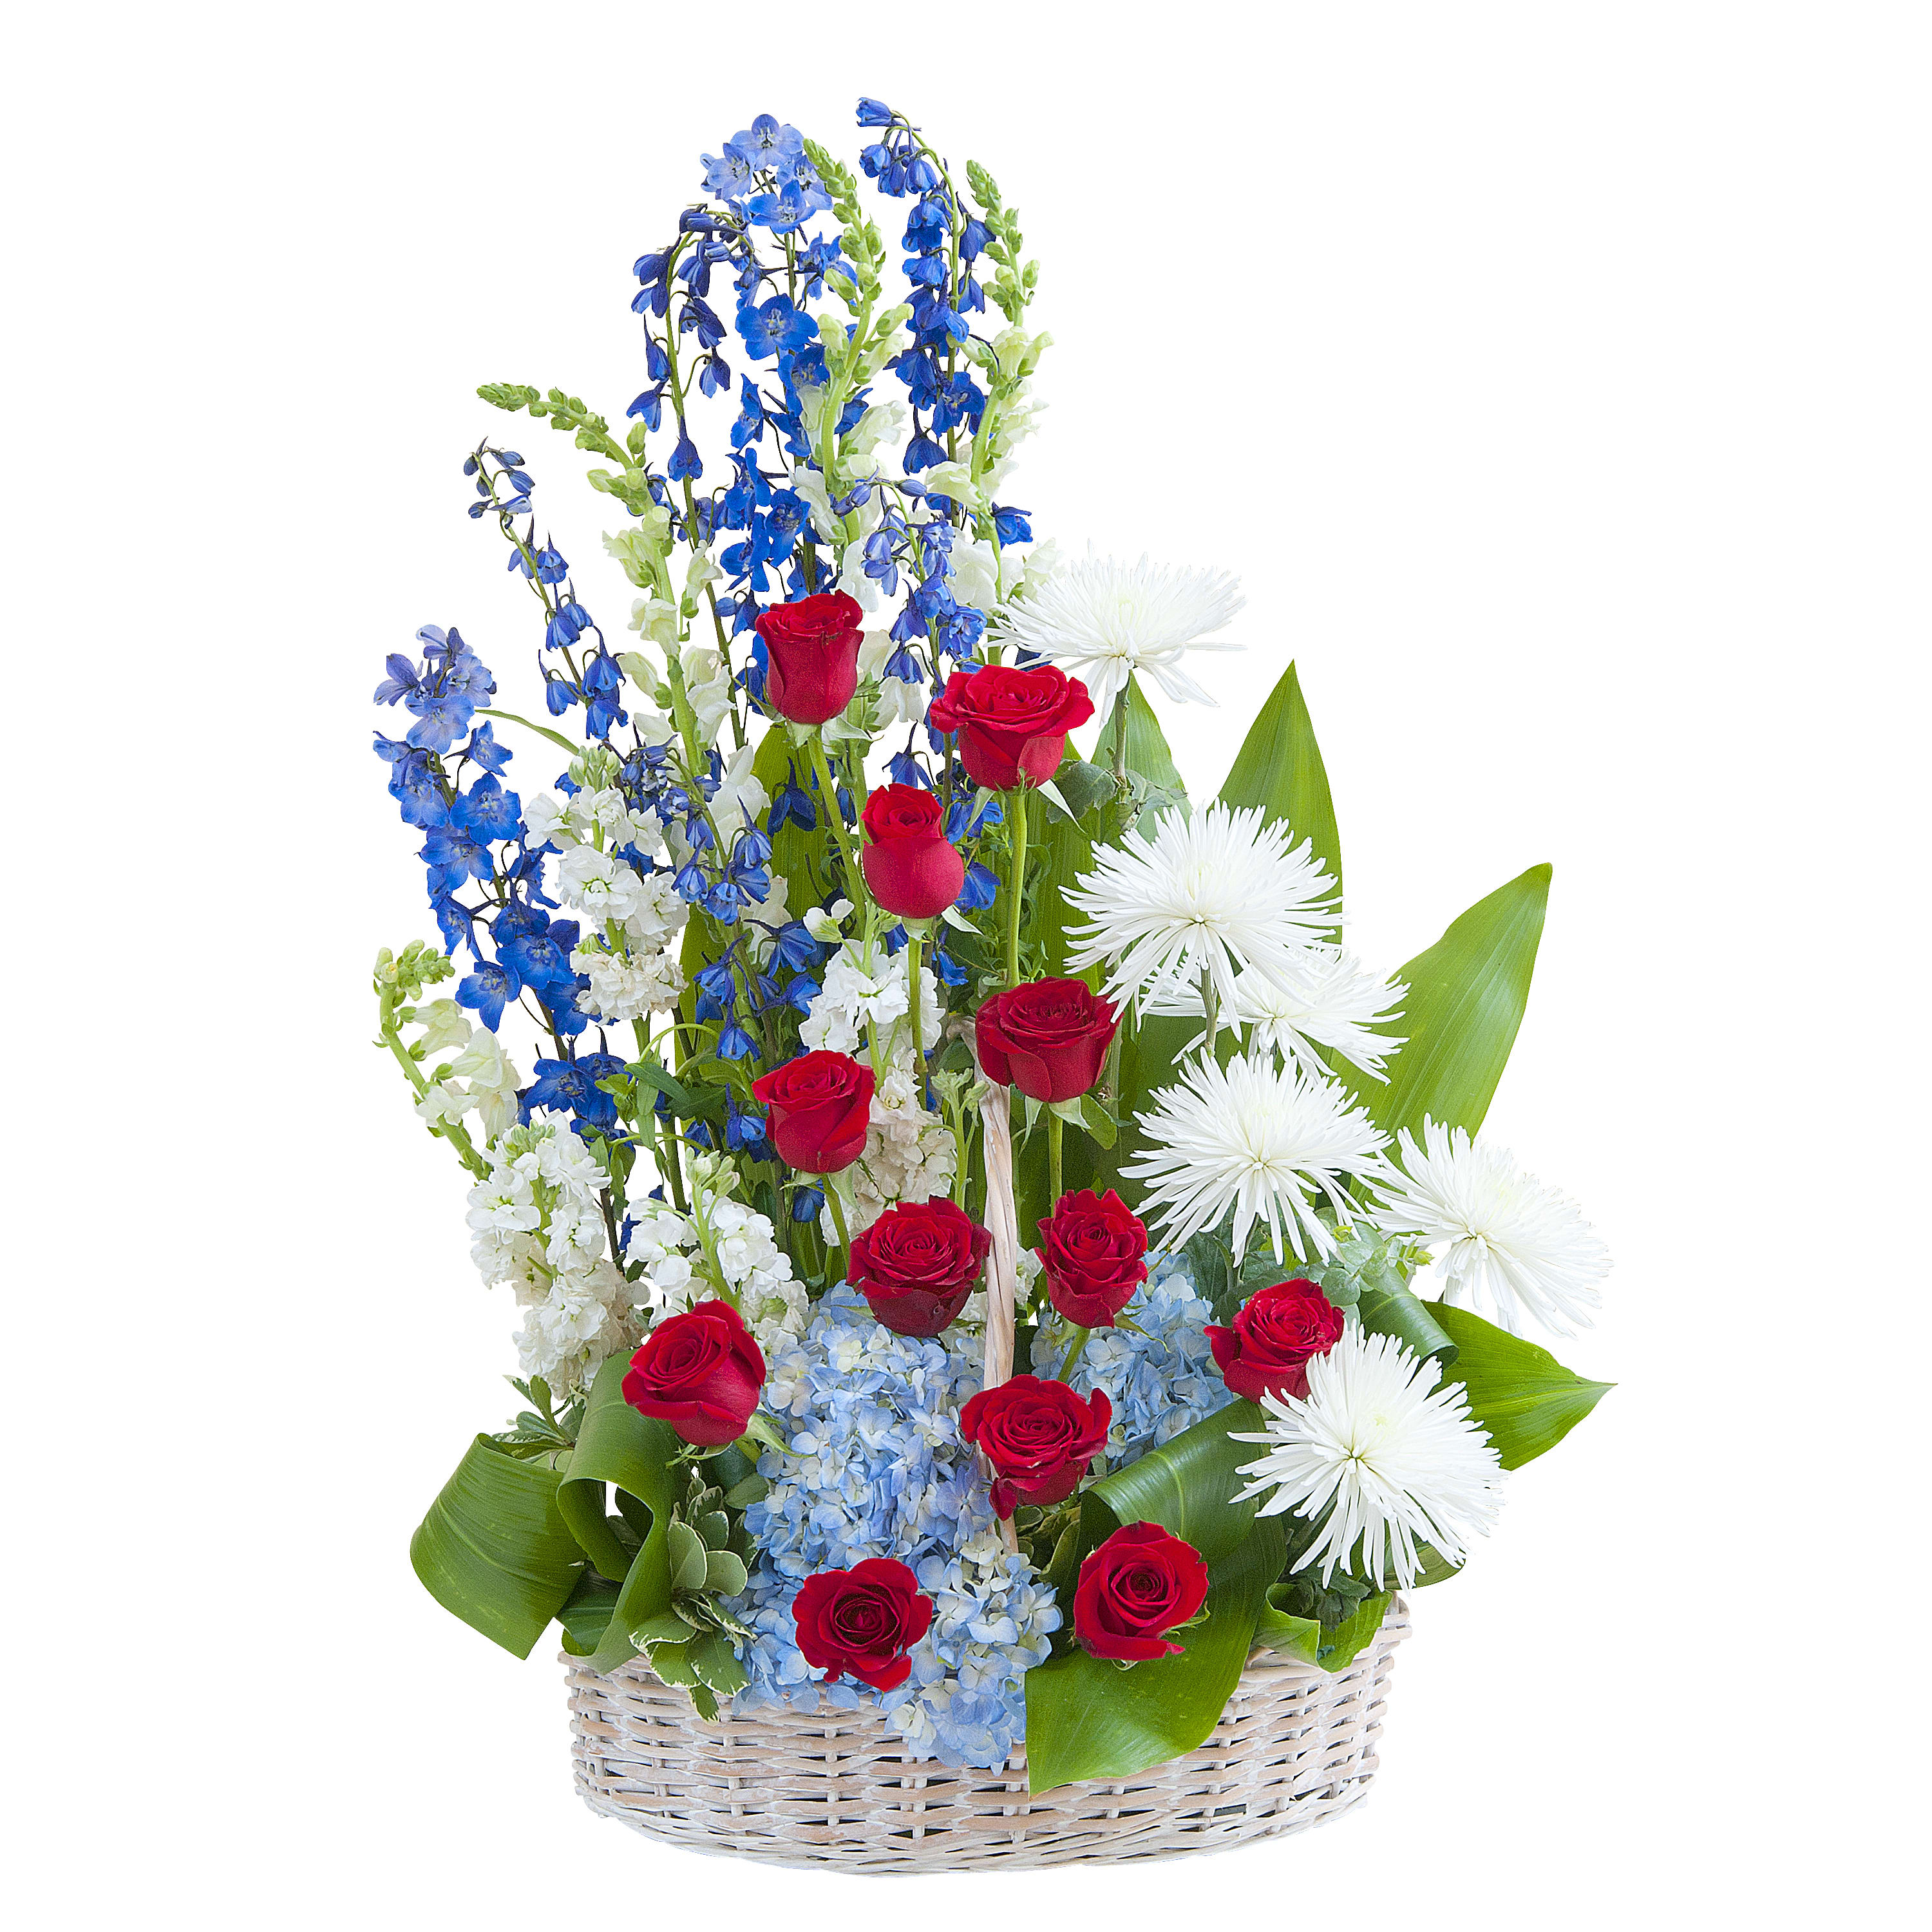 honor-basket-tribute-in-baltimore-md-rutland-beard-florist-of